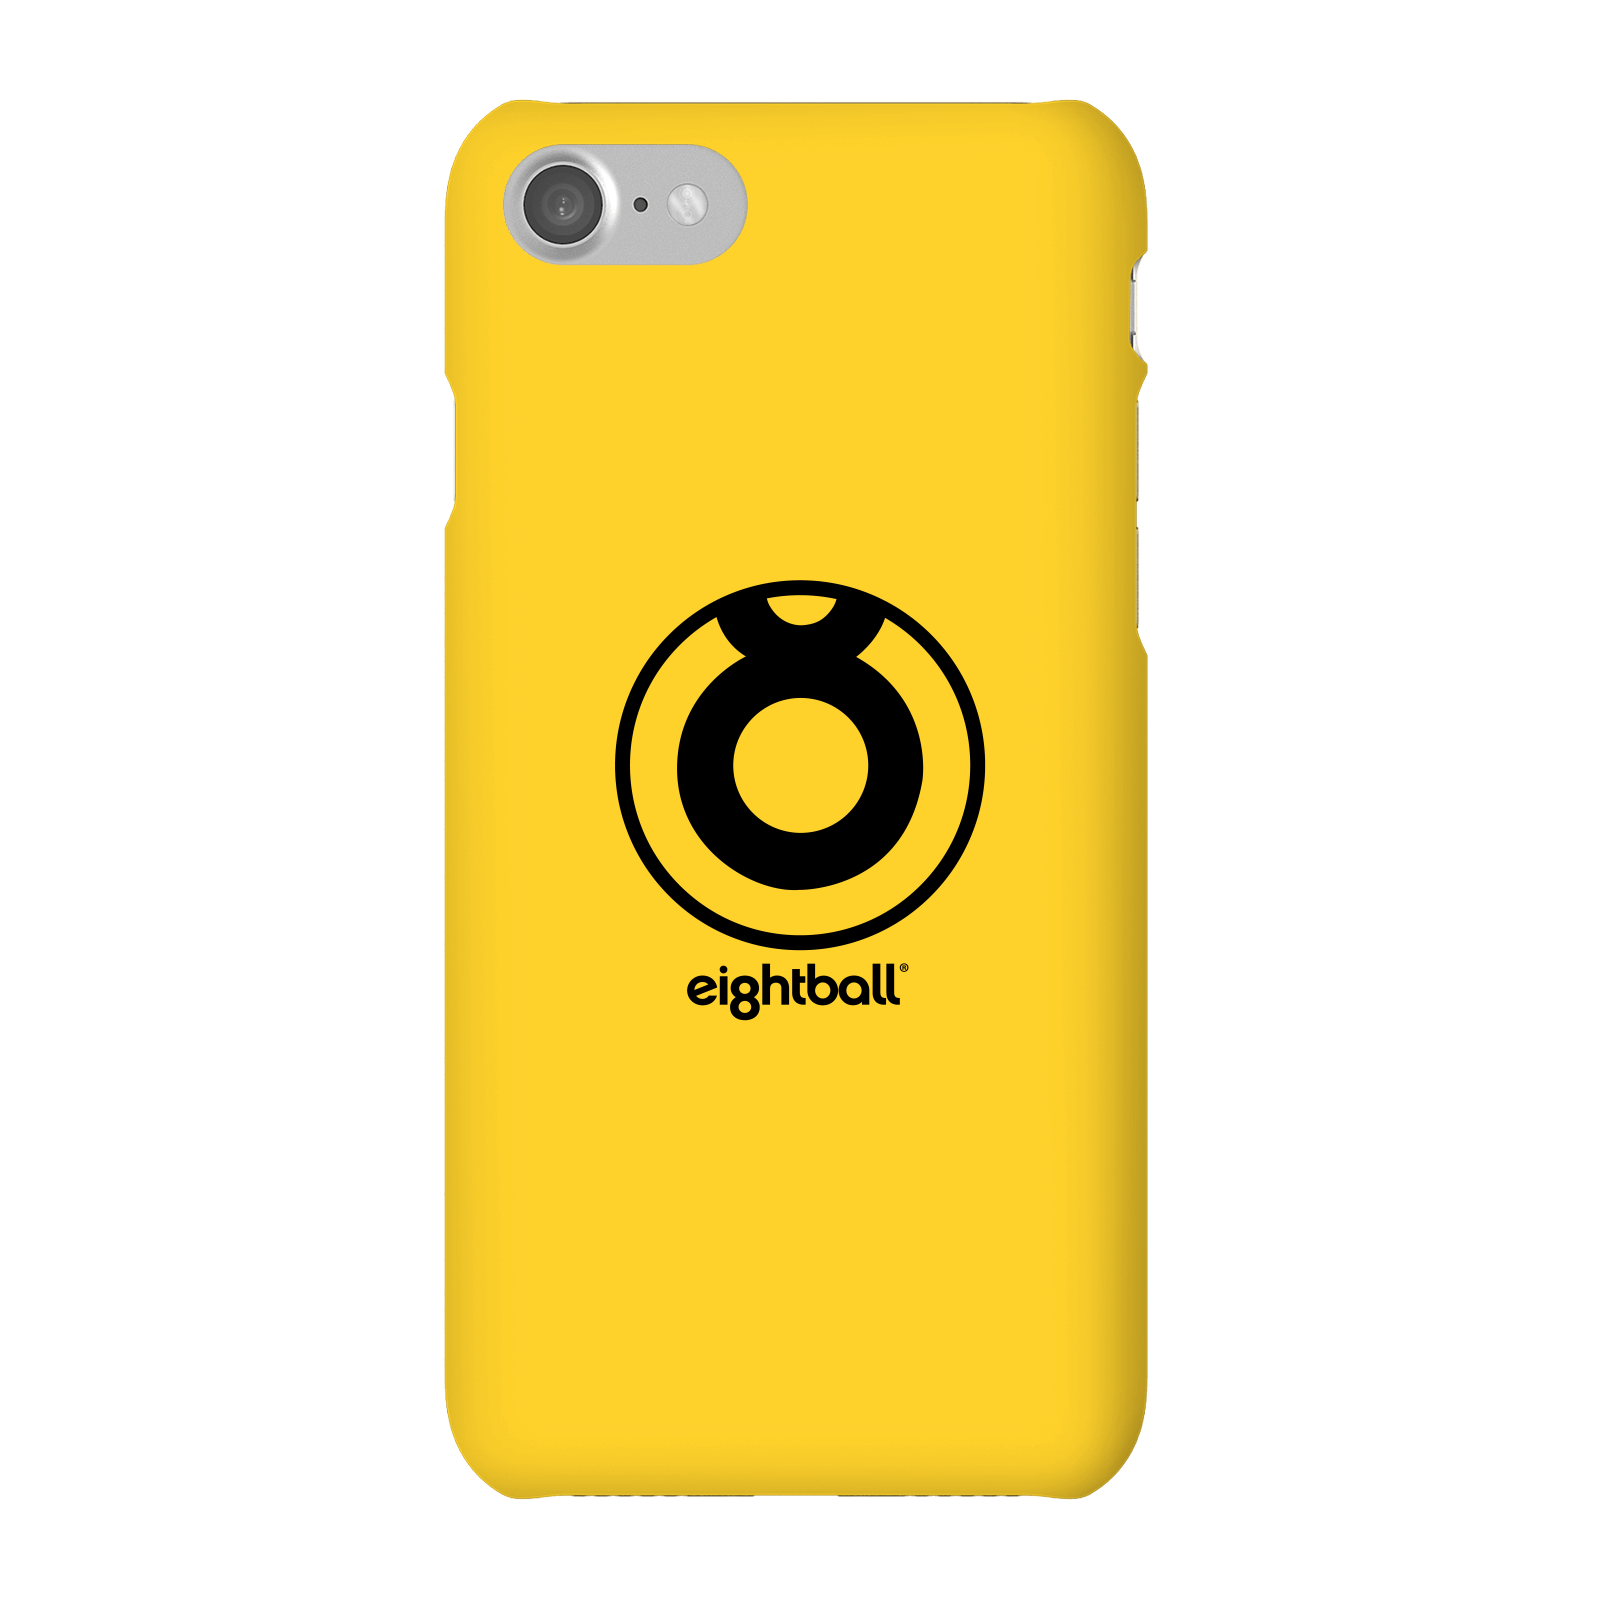 Funda Móvil Ei8htball Large Circle Logo para iPhone y Android - iPhone 7 - Carcasa rígida - Mate